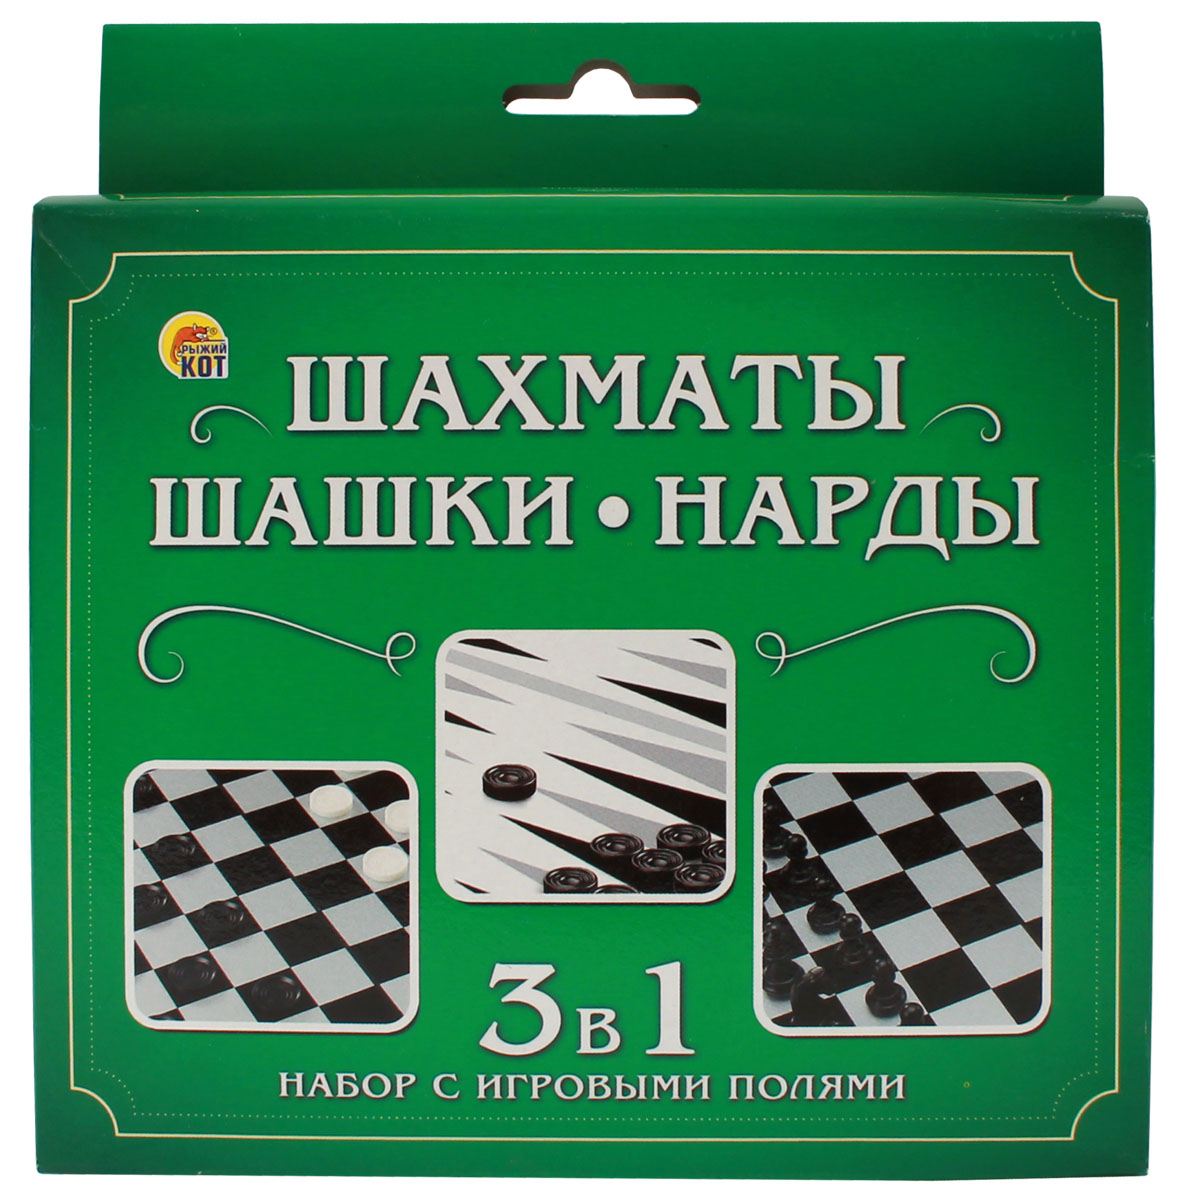 Рыжий Кот Настольная игра Шахматы шашки нарды Ин-1619